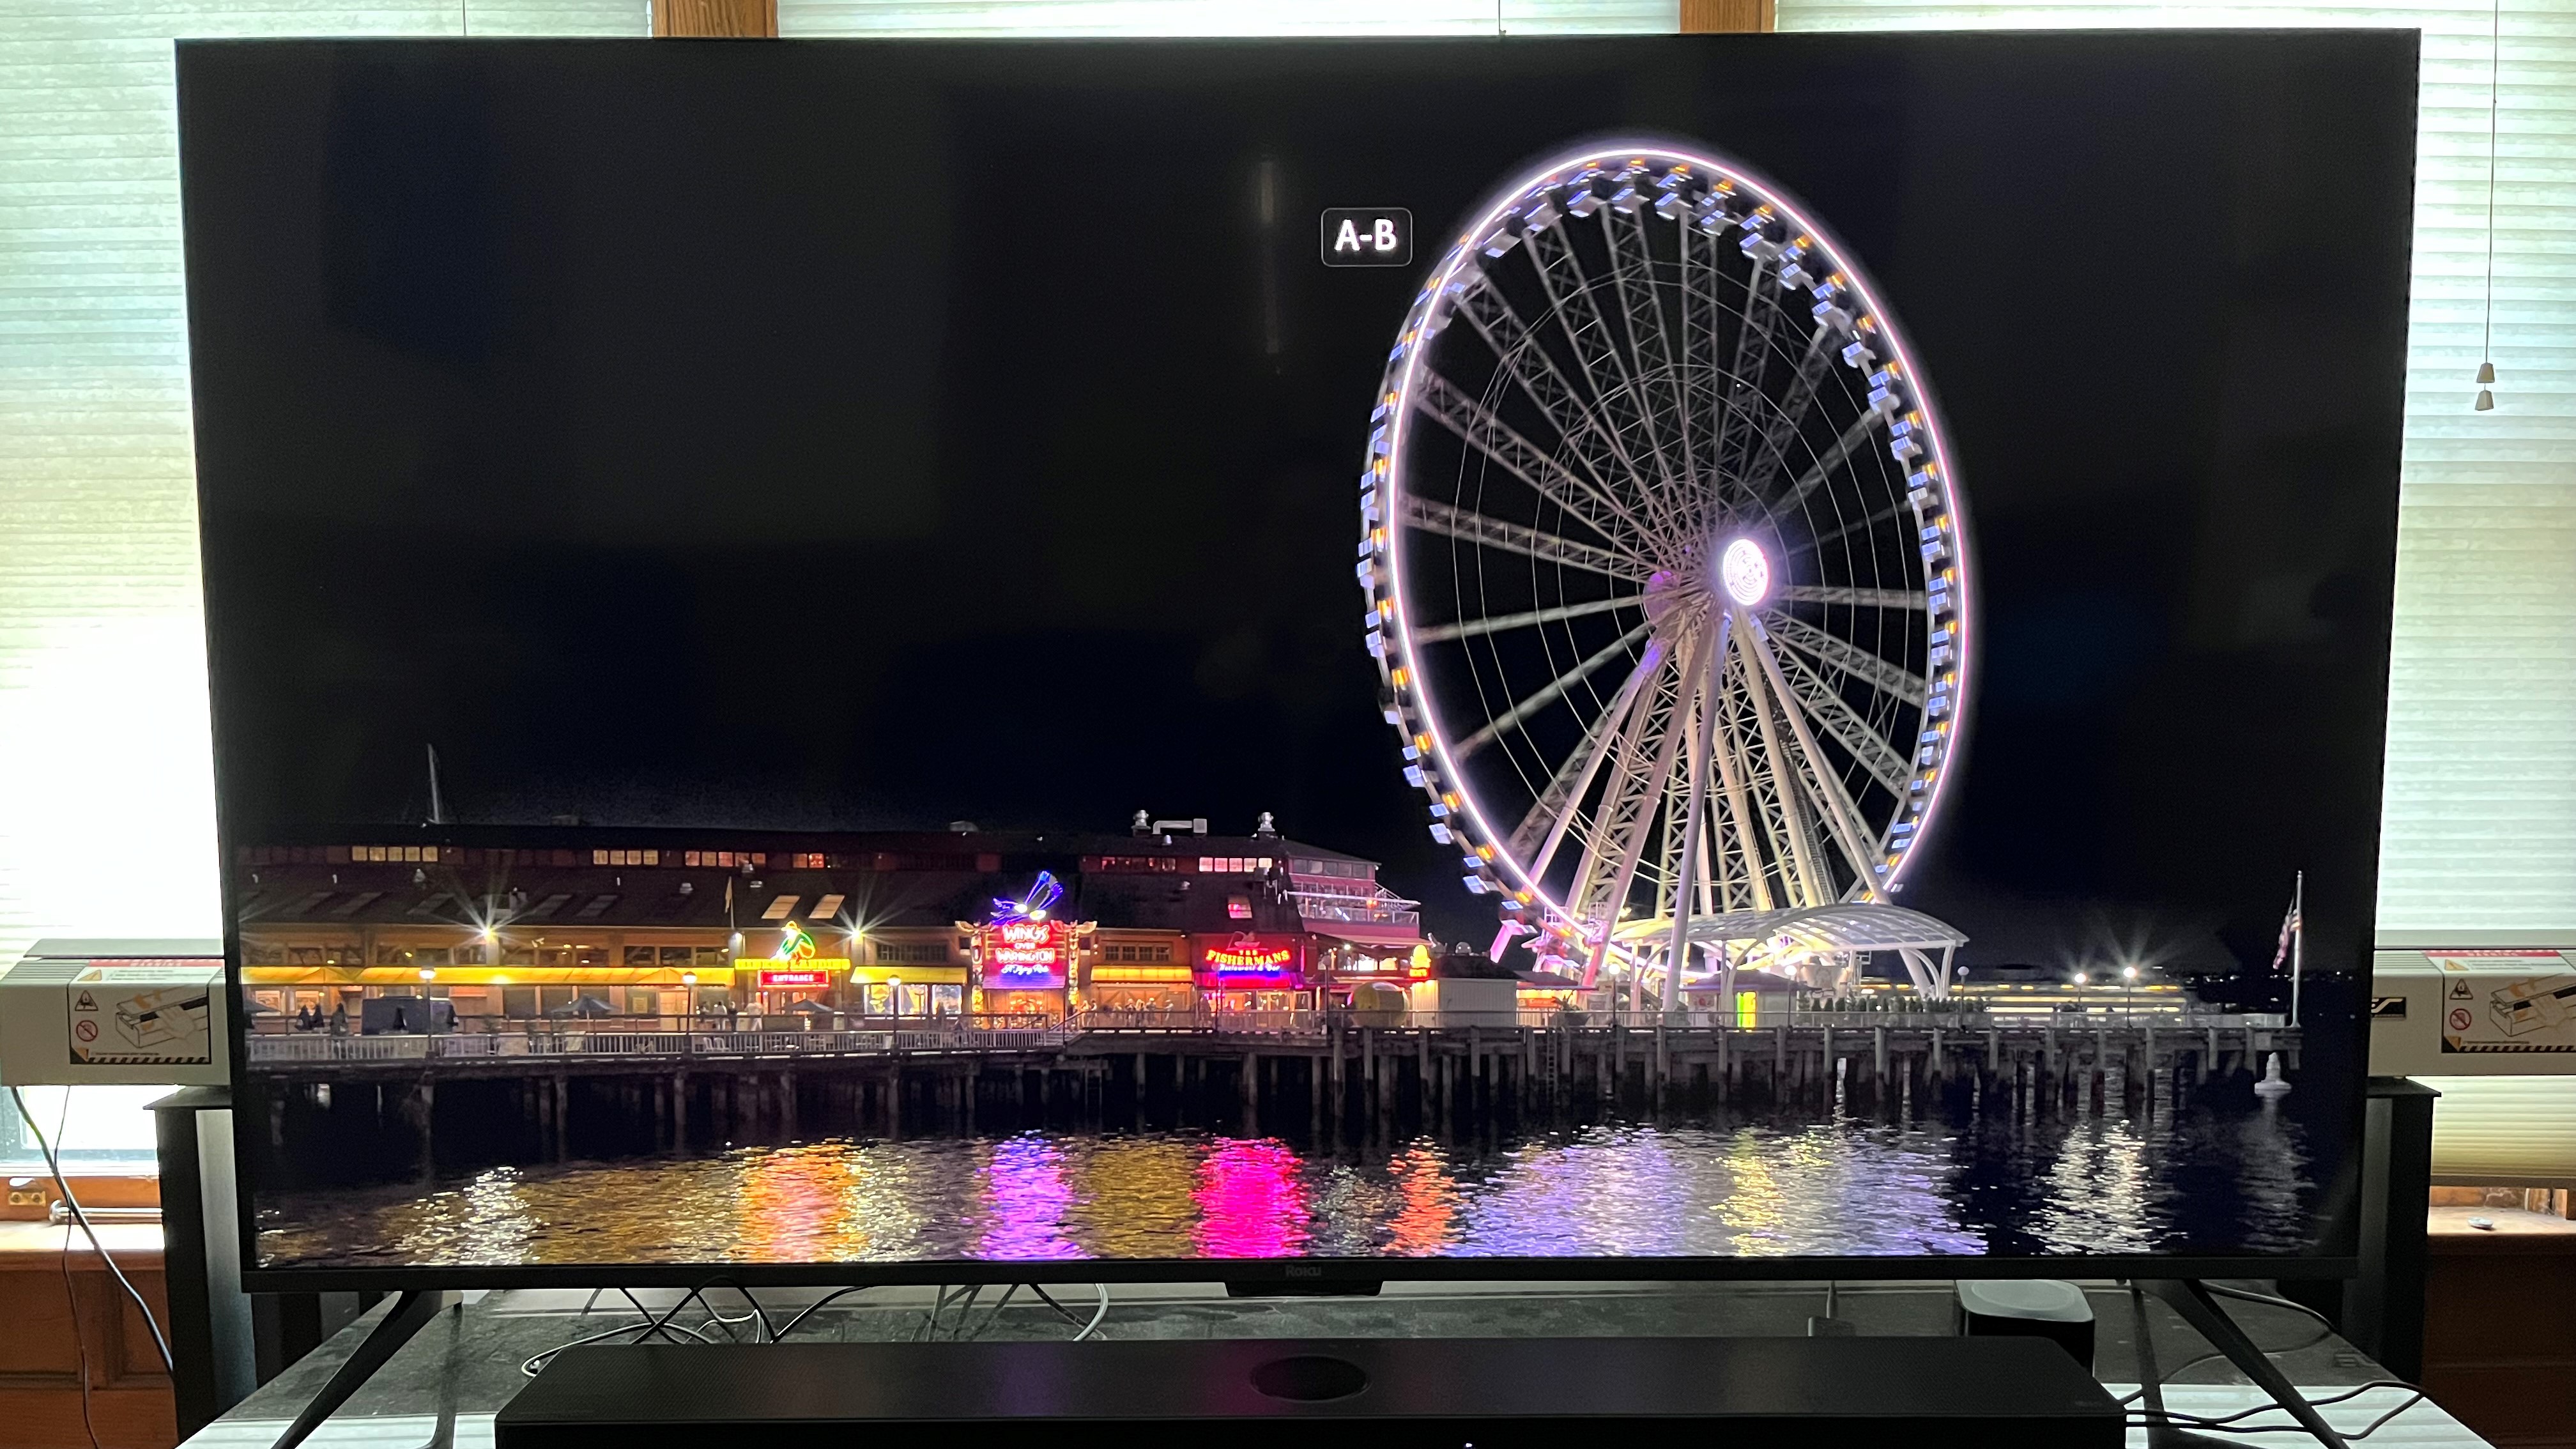 Roku Plus Series TV showing Ferris Wheel onscreen